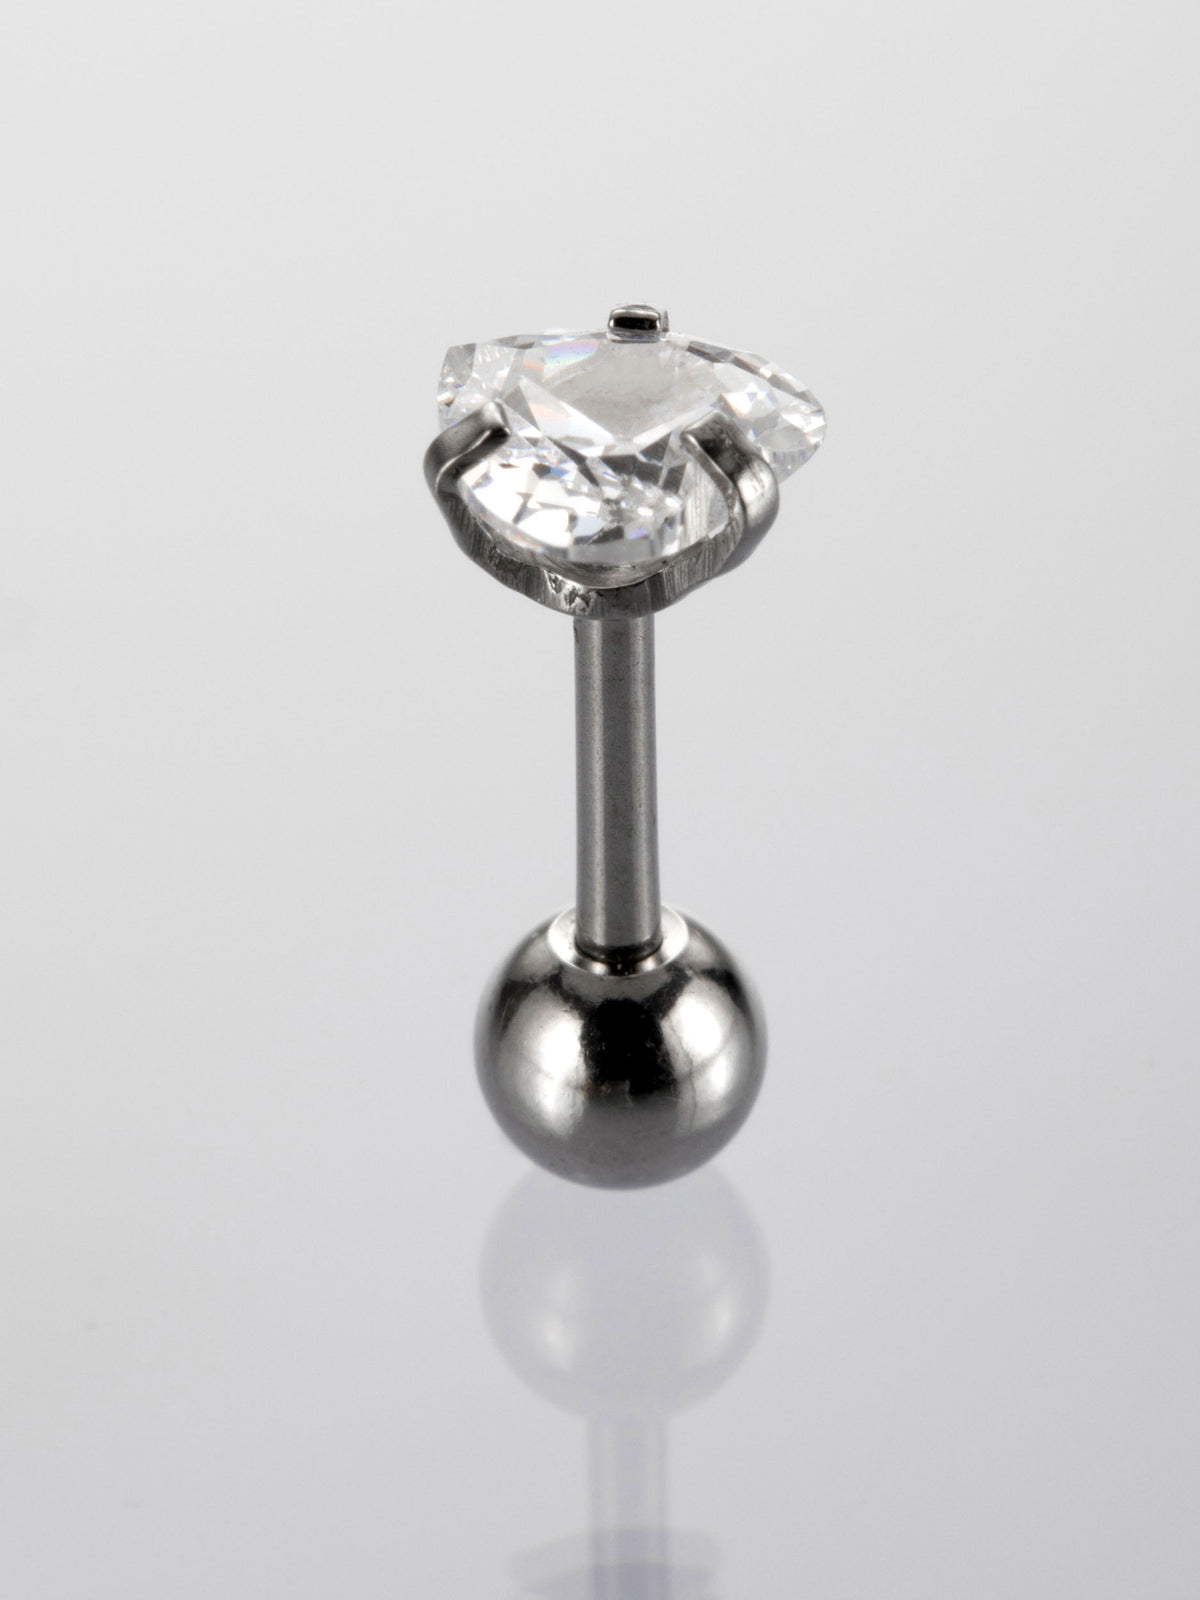 Činka piercing do ucha s čirým krystalem ve tvaru srdce  VB0033-07